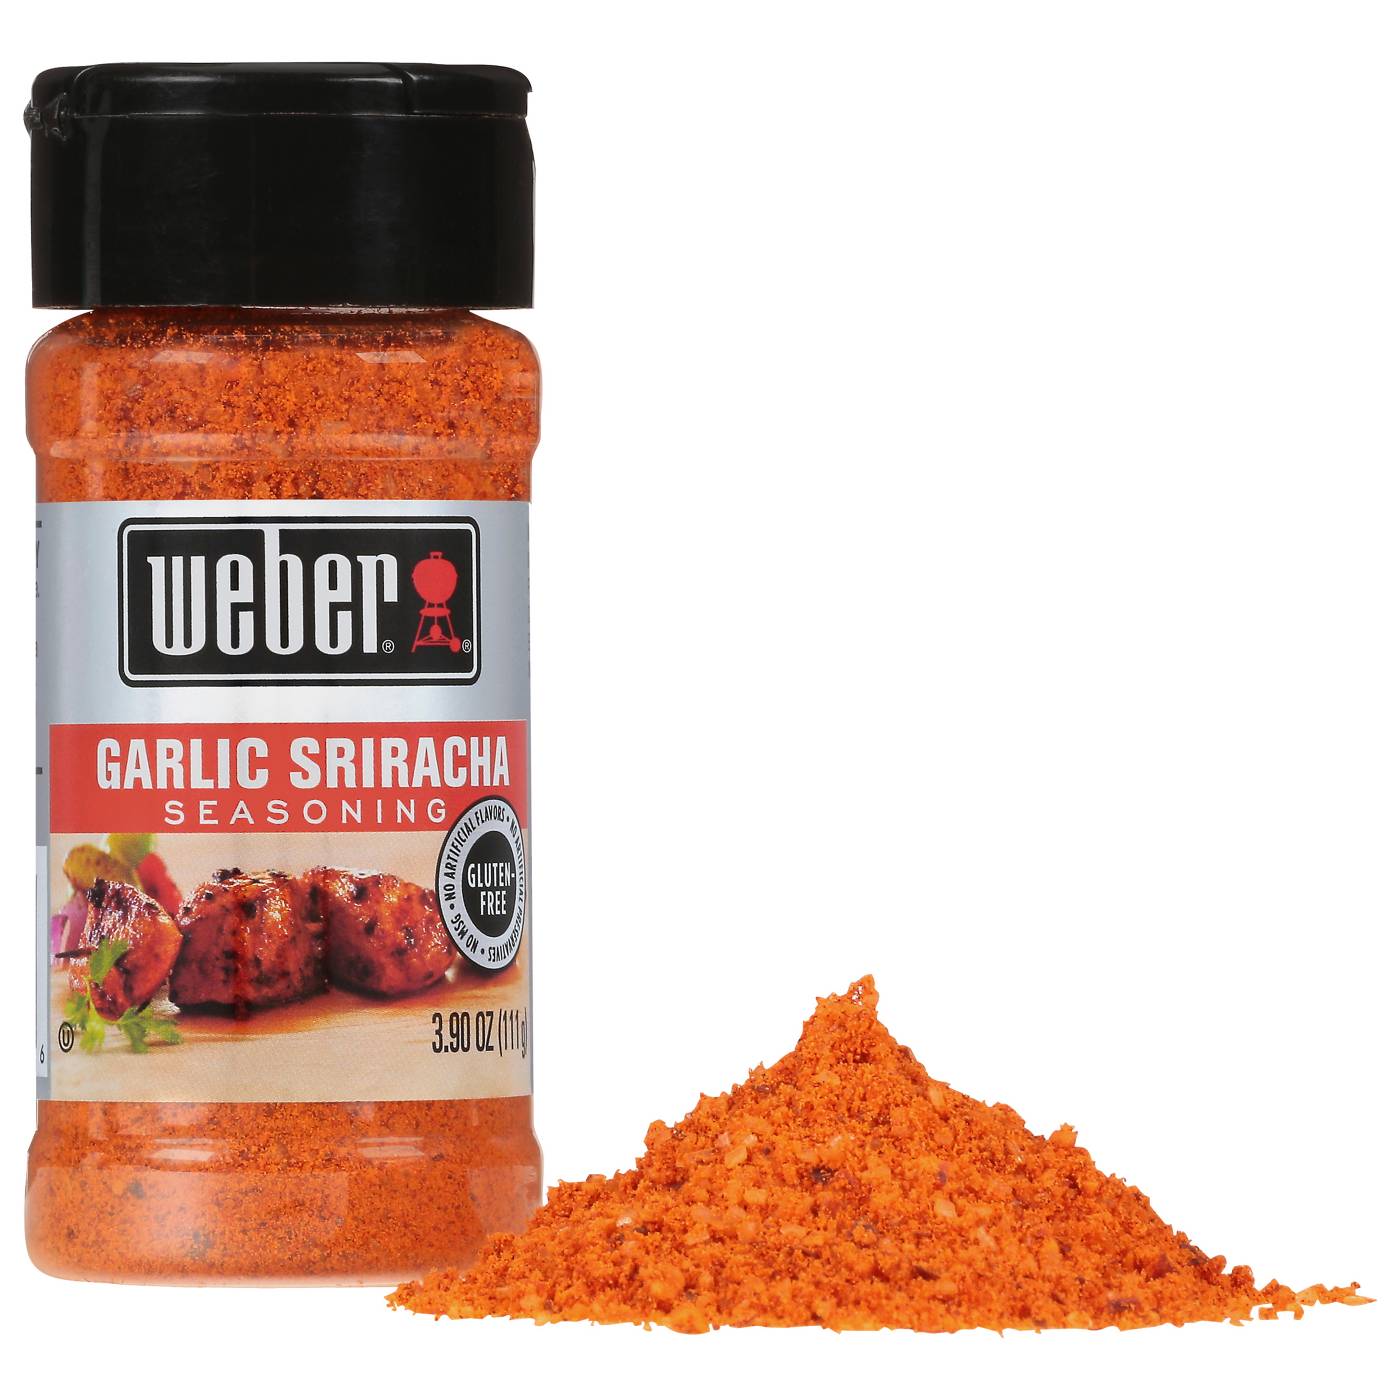 Weber Garlic Sriracha Seasoning; image 2 of 3